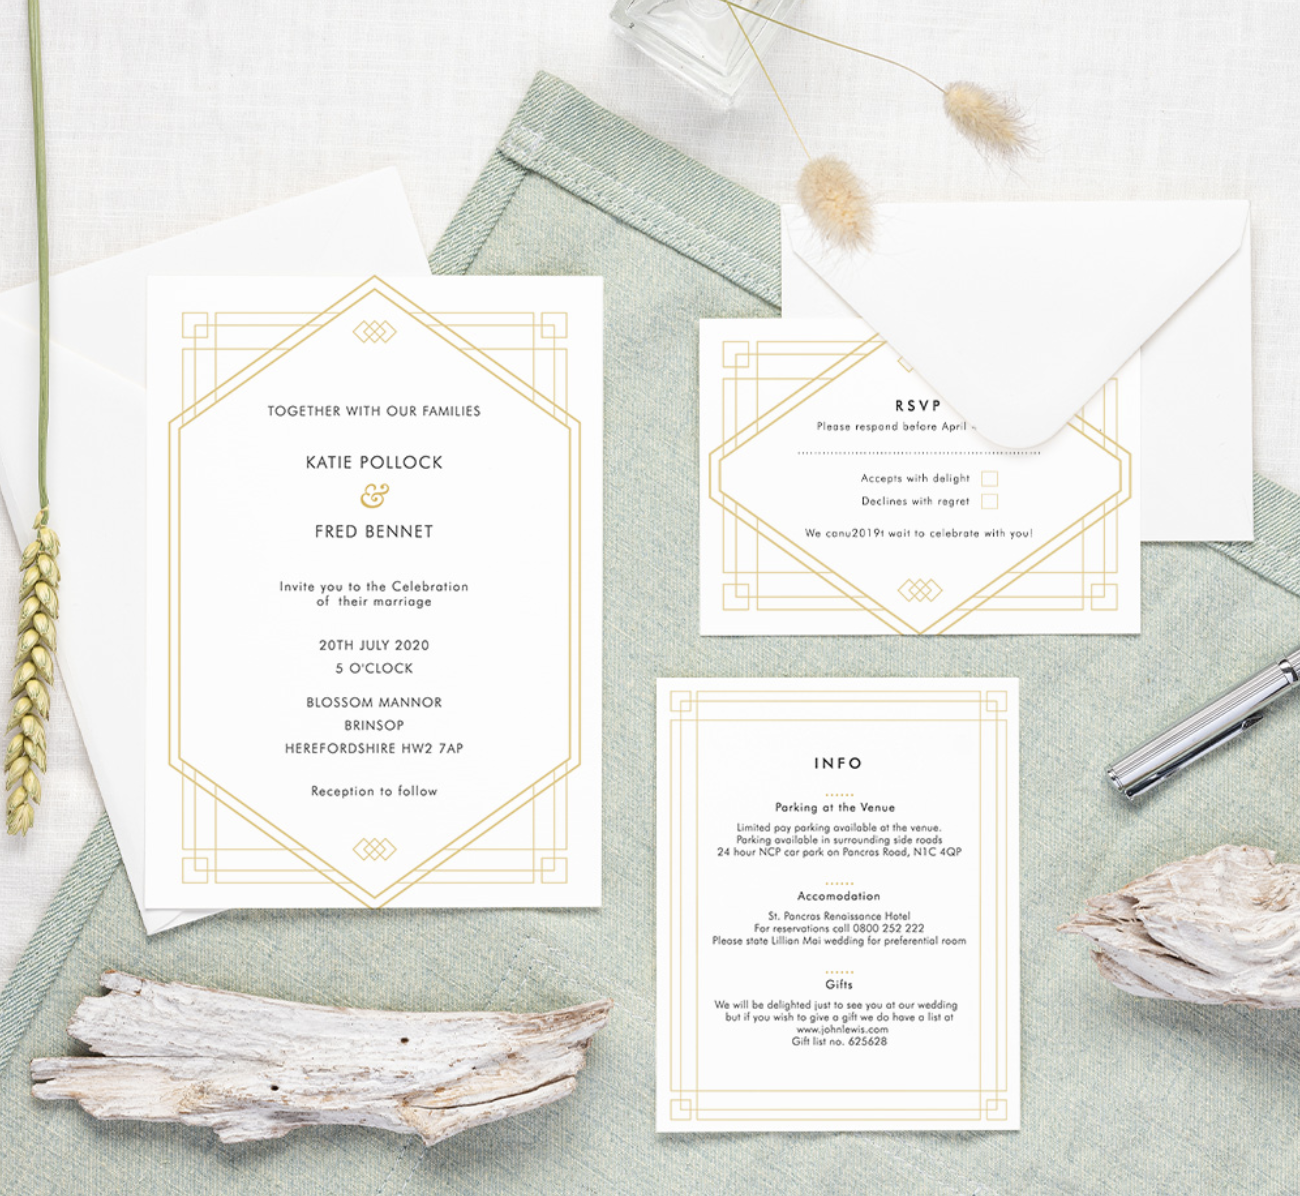 Elegant, art deco style wedding invitation in gold and white